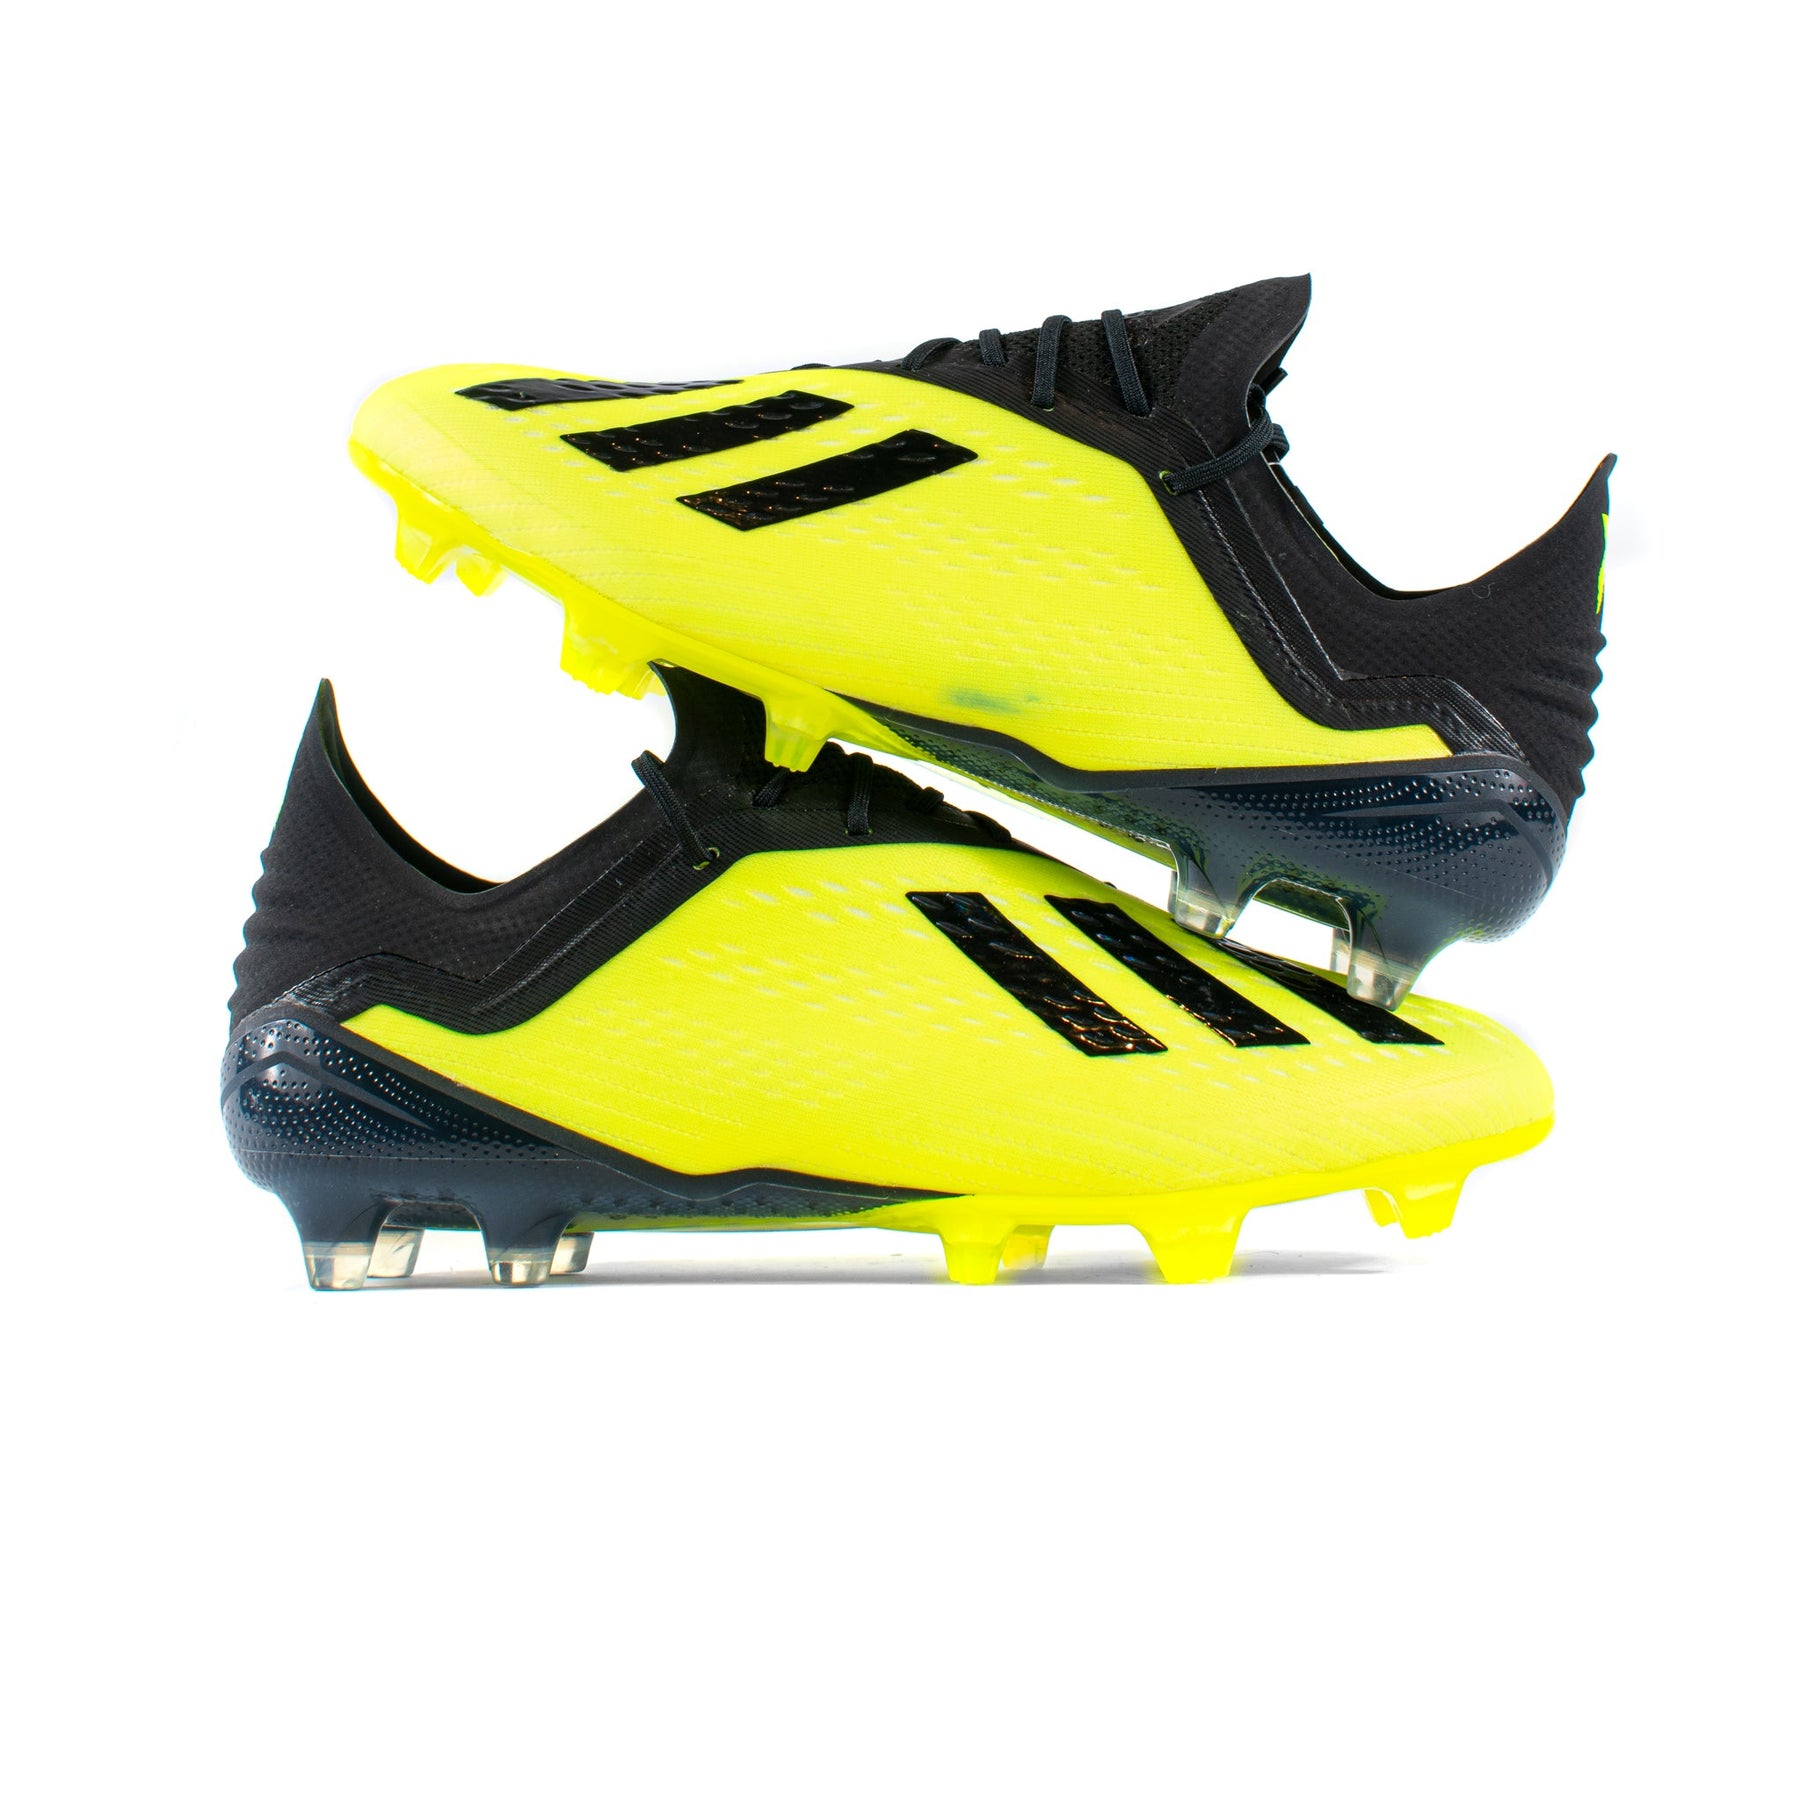 Adidas X18.1 Yellow FG – Soccer Cleats